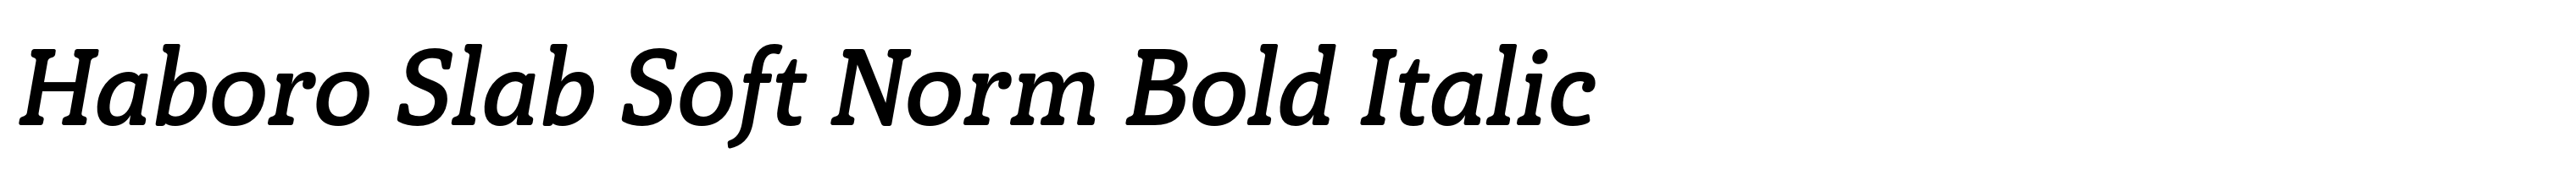 Haboro Slab Soft Norm Bold Italic